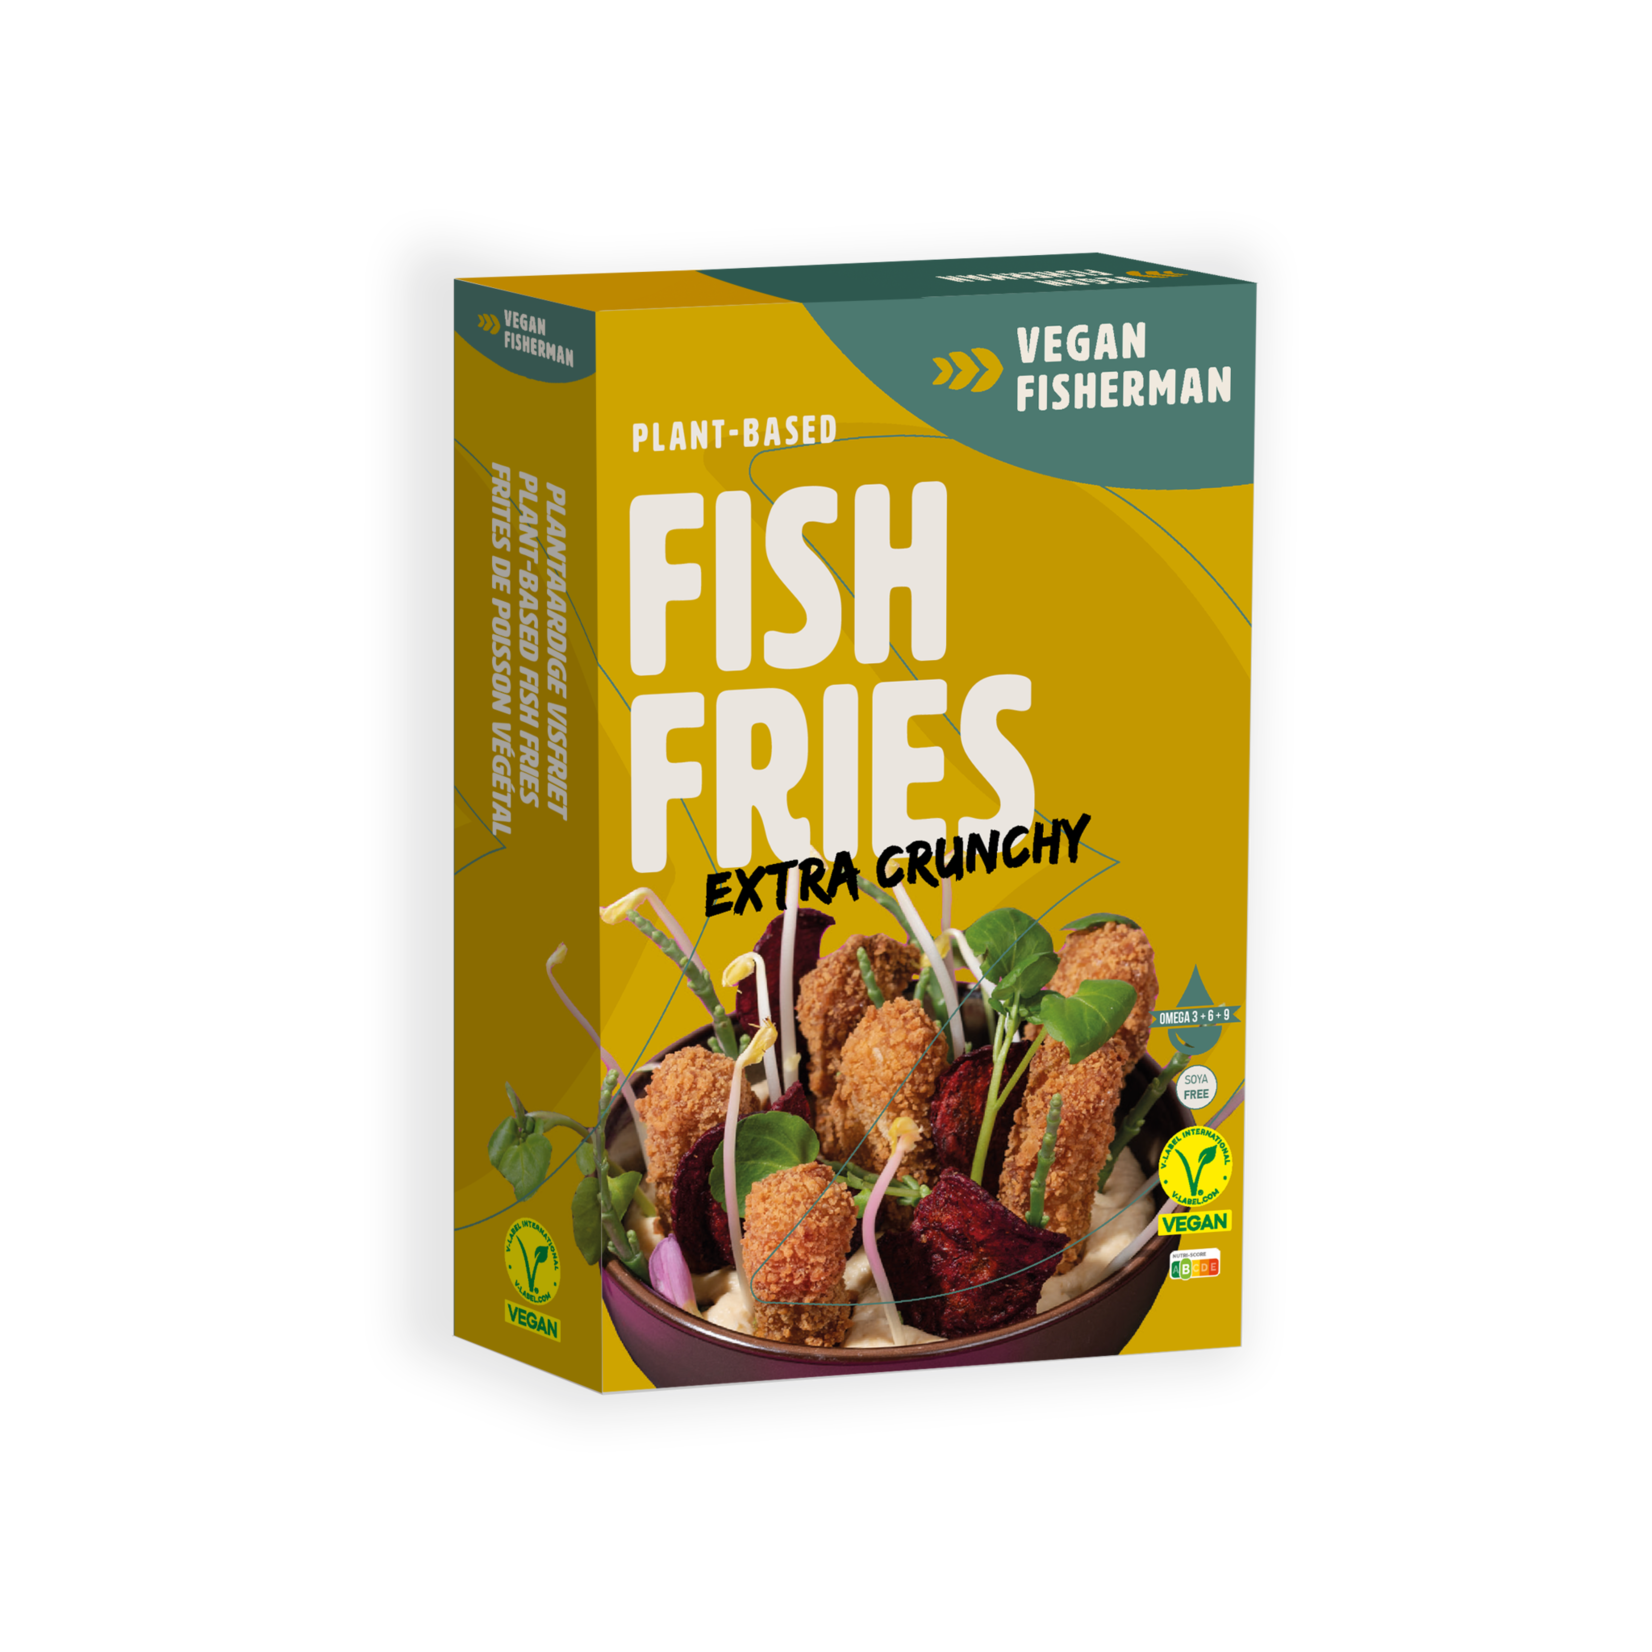 Vegan Visboer - Vegan Fisherman Snack box: Fish Nugget, Chunks, Shrimp, Fish Fries.